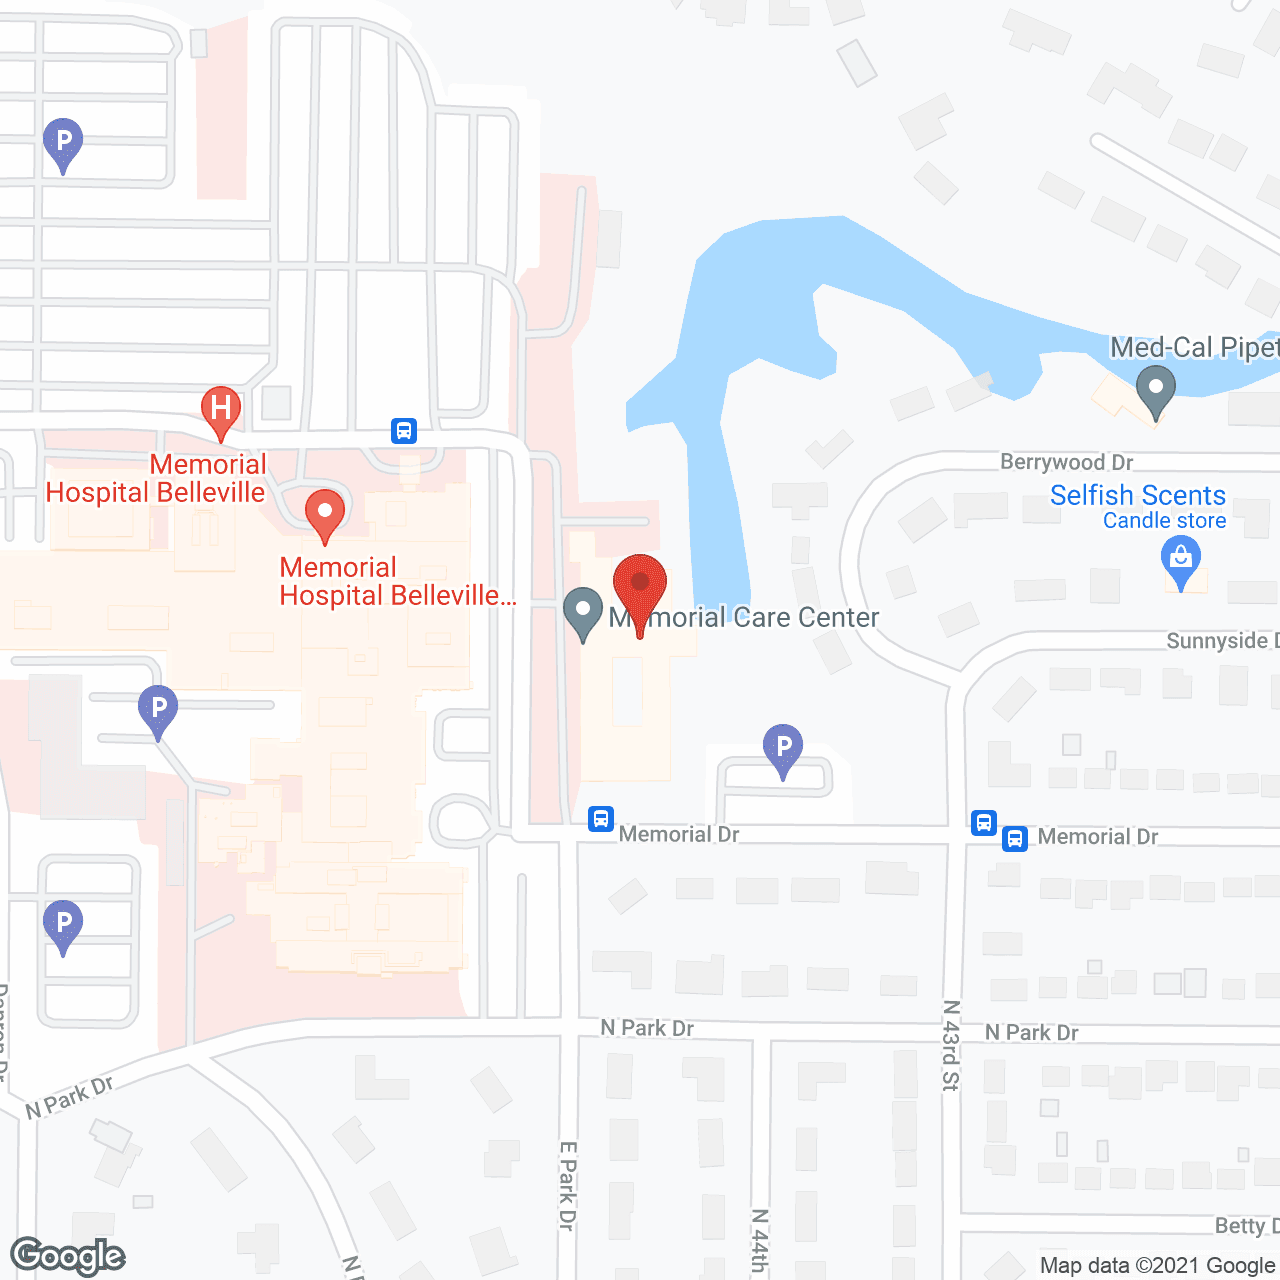 Memorial Care Center- Belleville Mem Hosp in google map